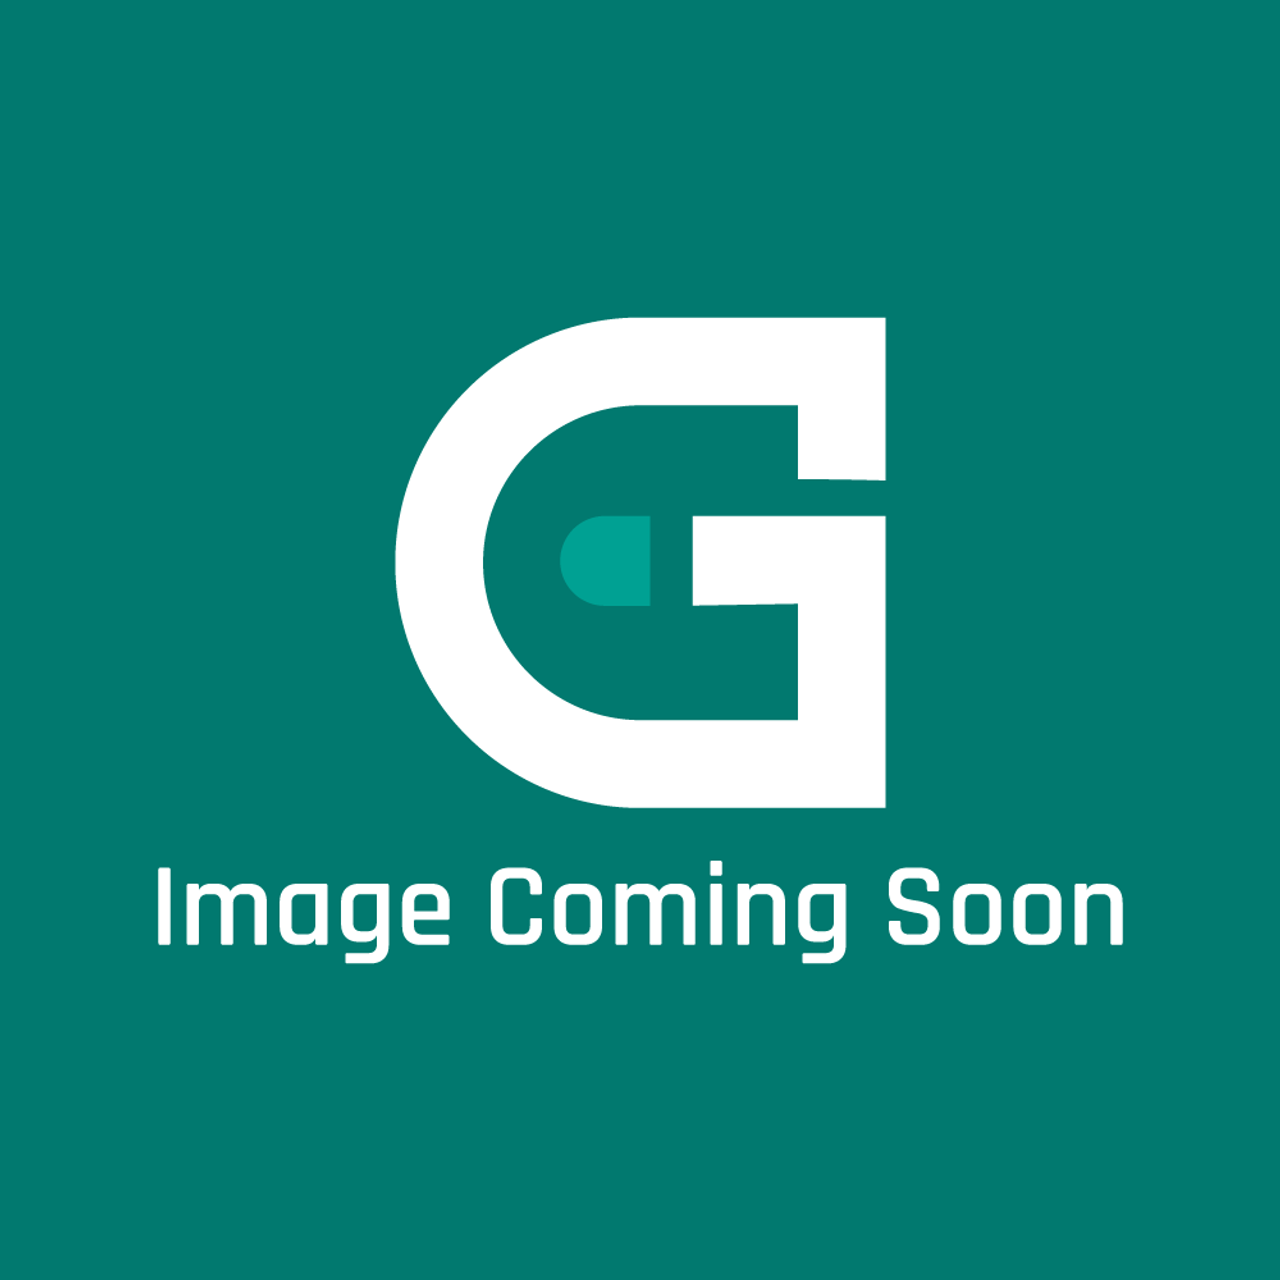 GE Appliances 16G44 - 105224-03 Limit Control (Stilt) 190F - Image Coming Soon!